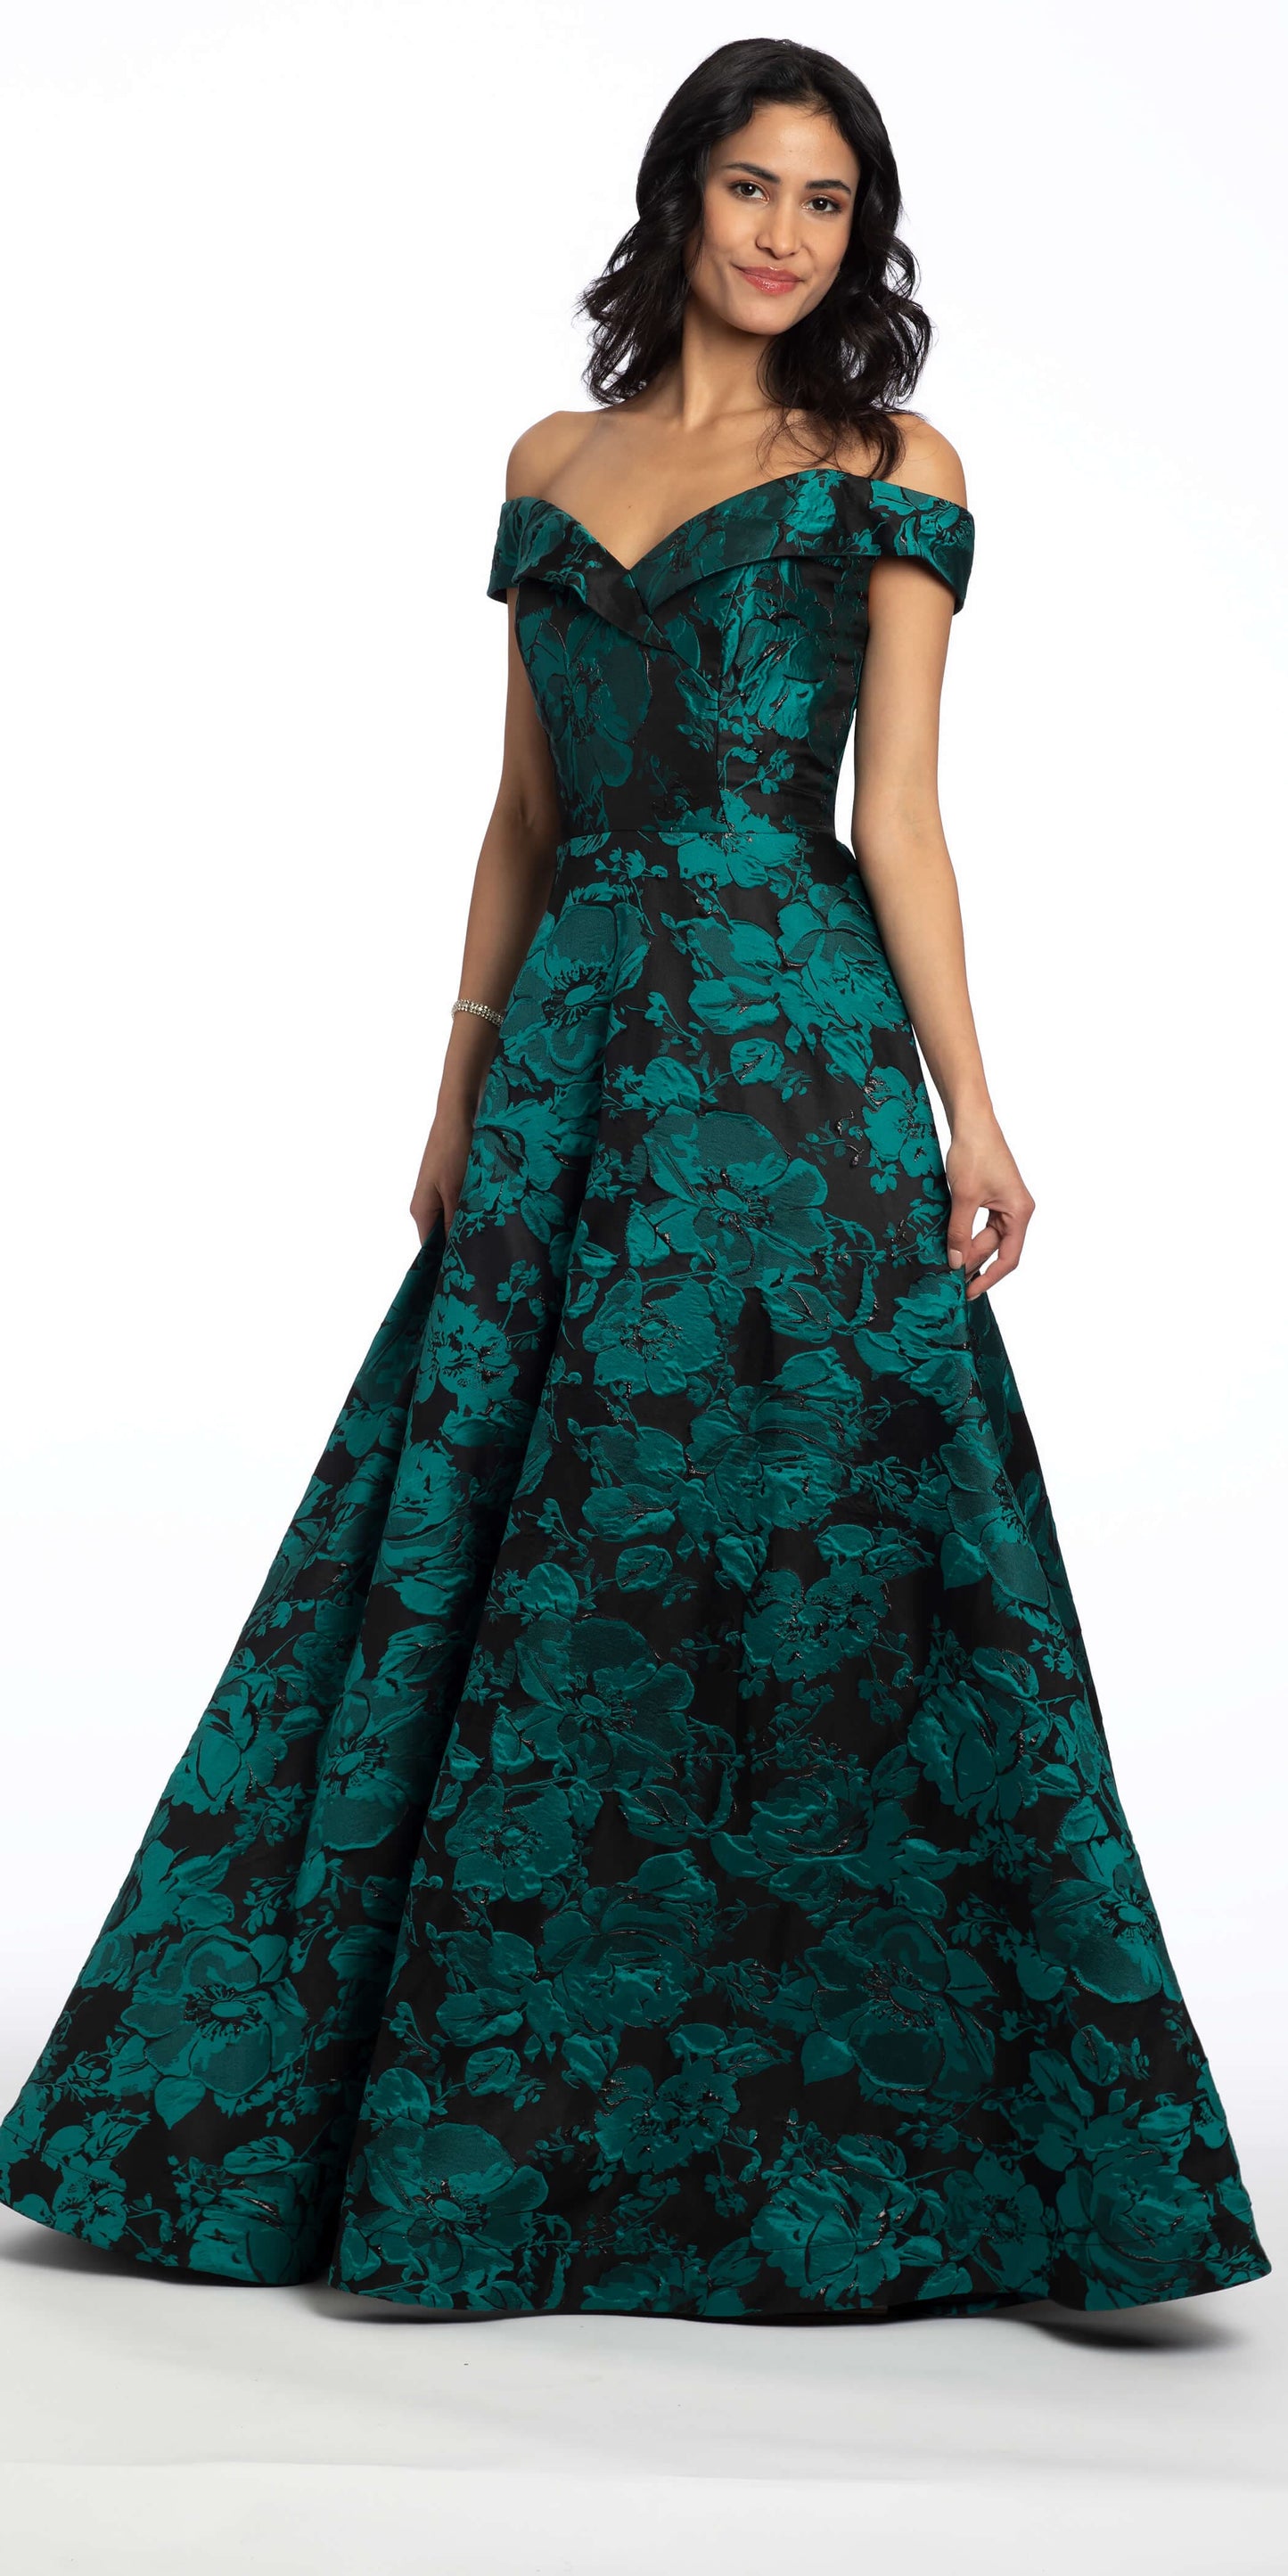 Camille La Vie Floral Jacquard Off The Shoulder Ballgown missy / 16 / black-green